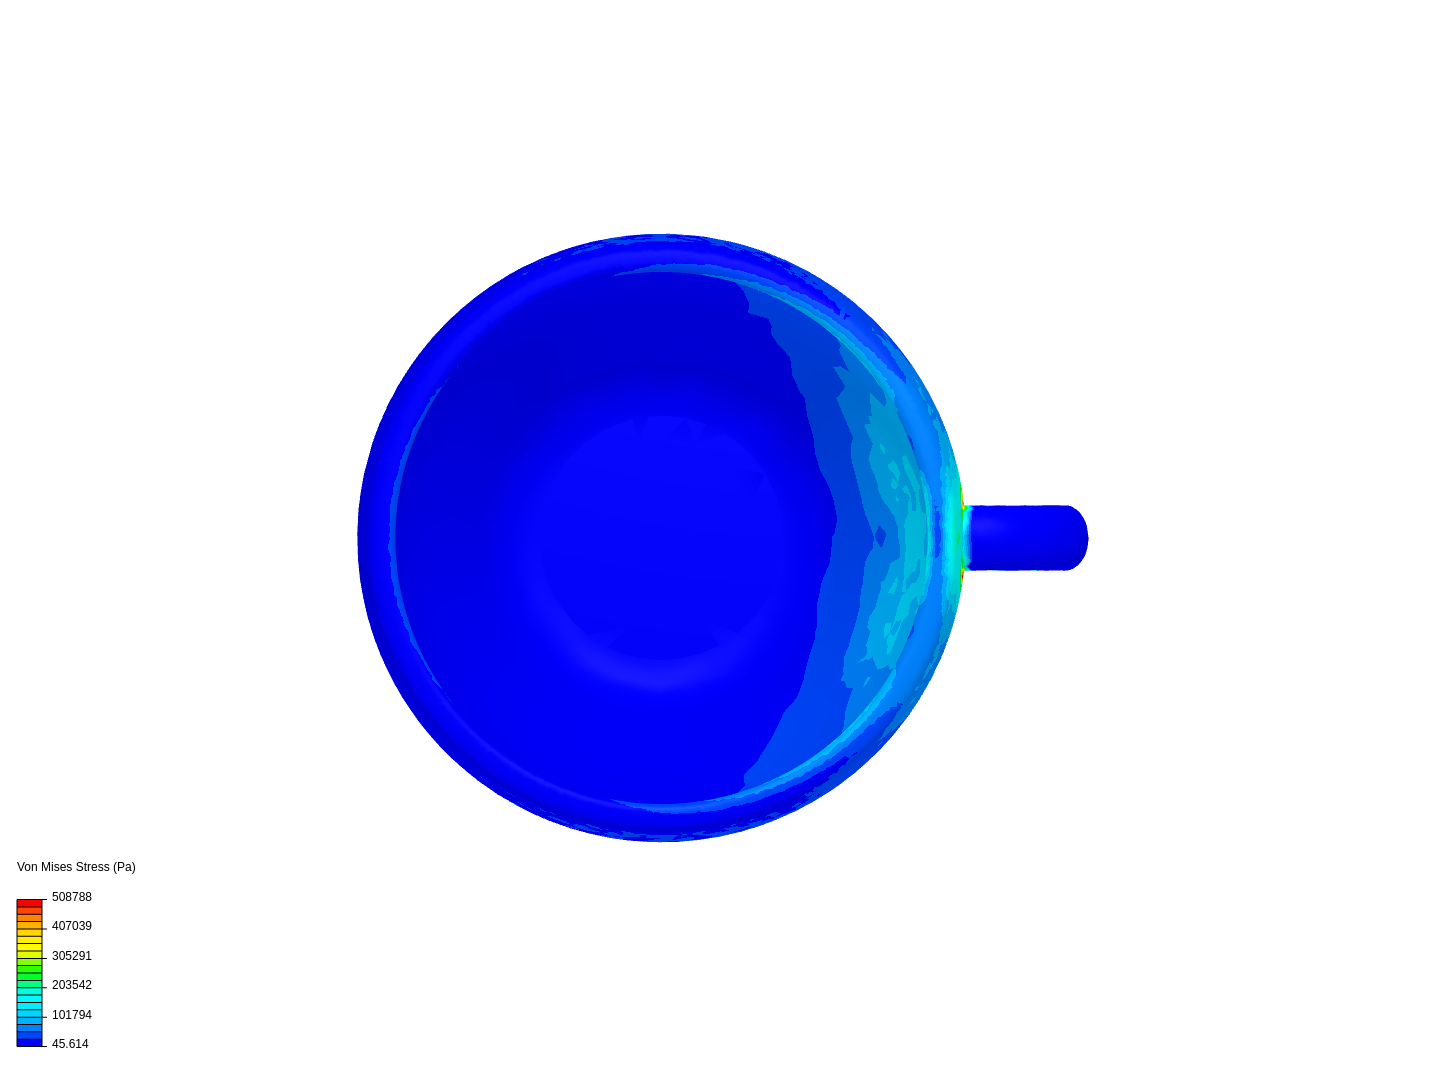 Basic Tea Cup image